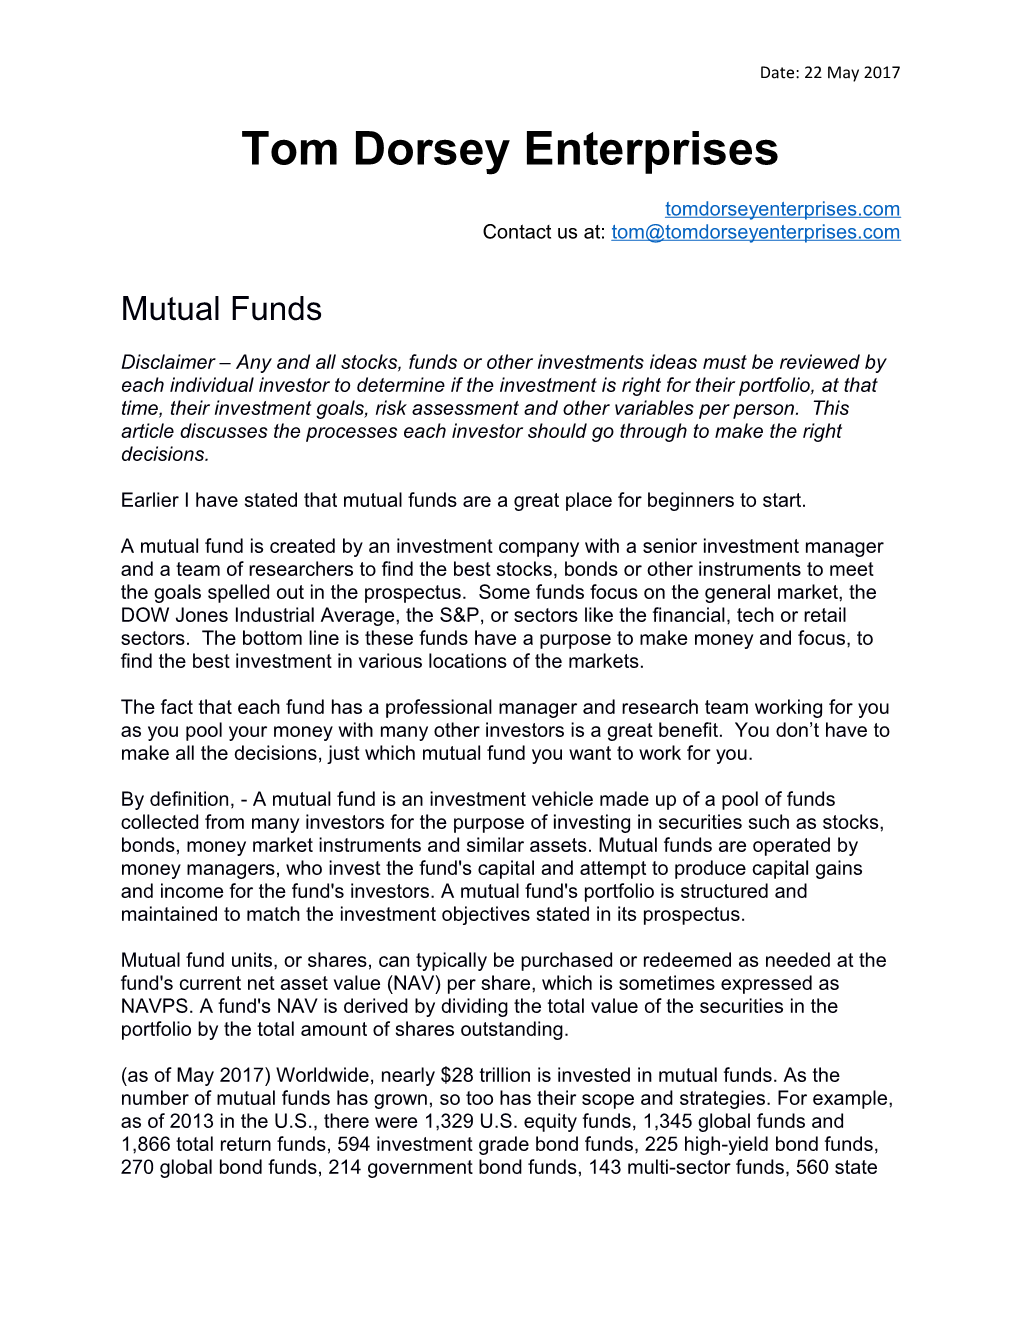 Tom Dorsey Enterprises